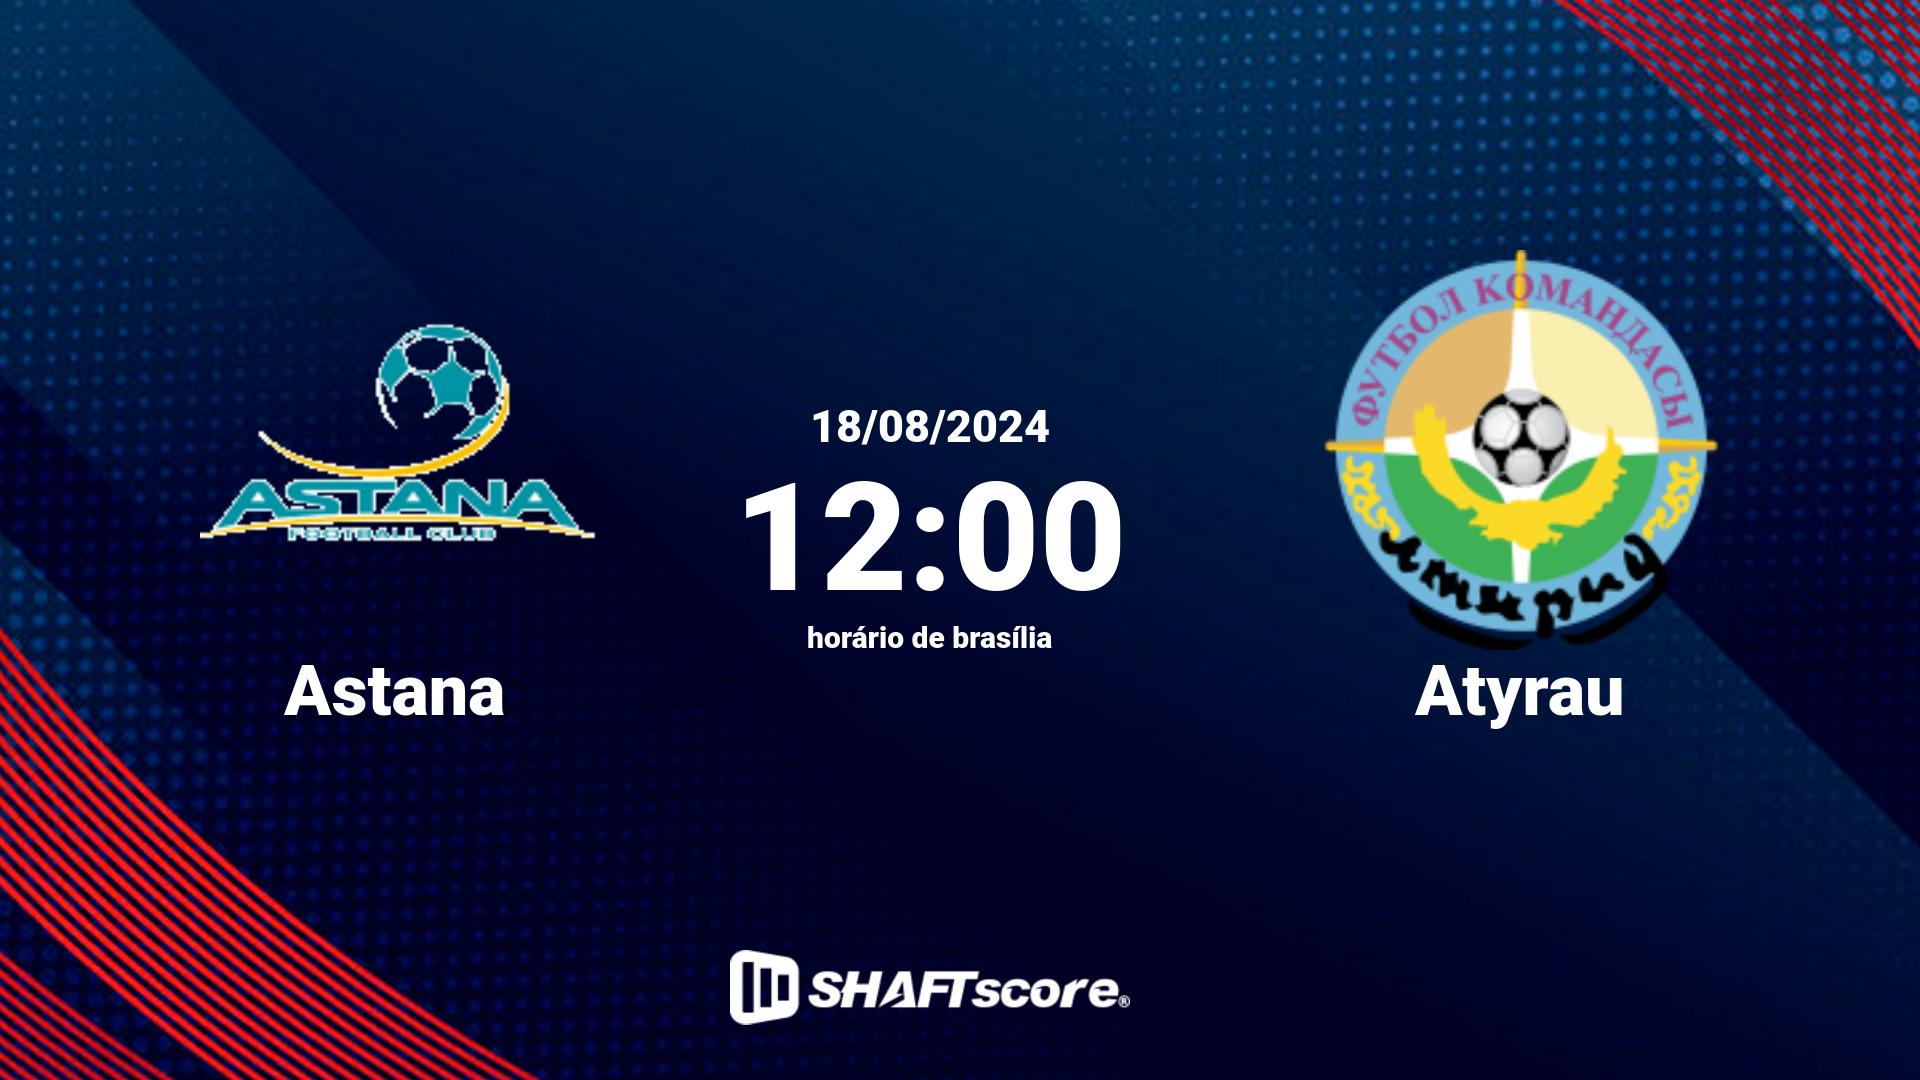 Estatísticas do jogo Astana vs Atyrau 18.08 12:00